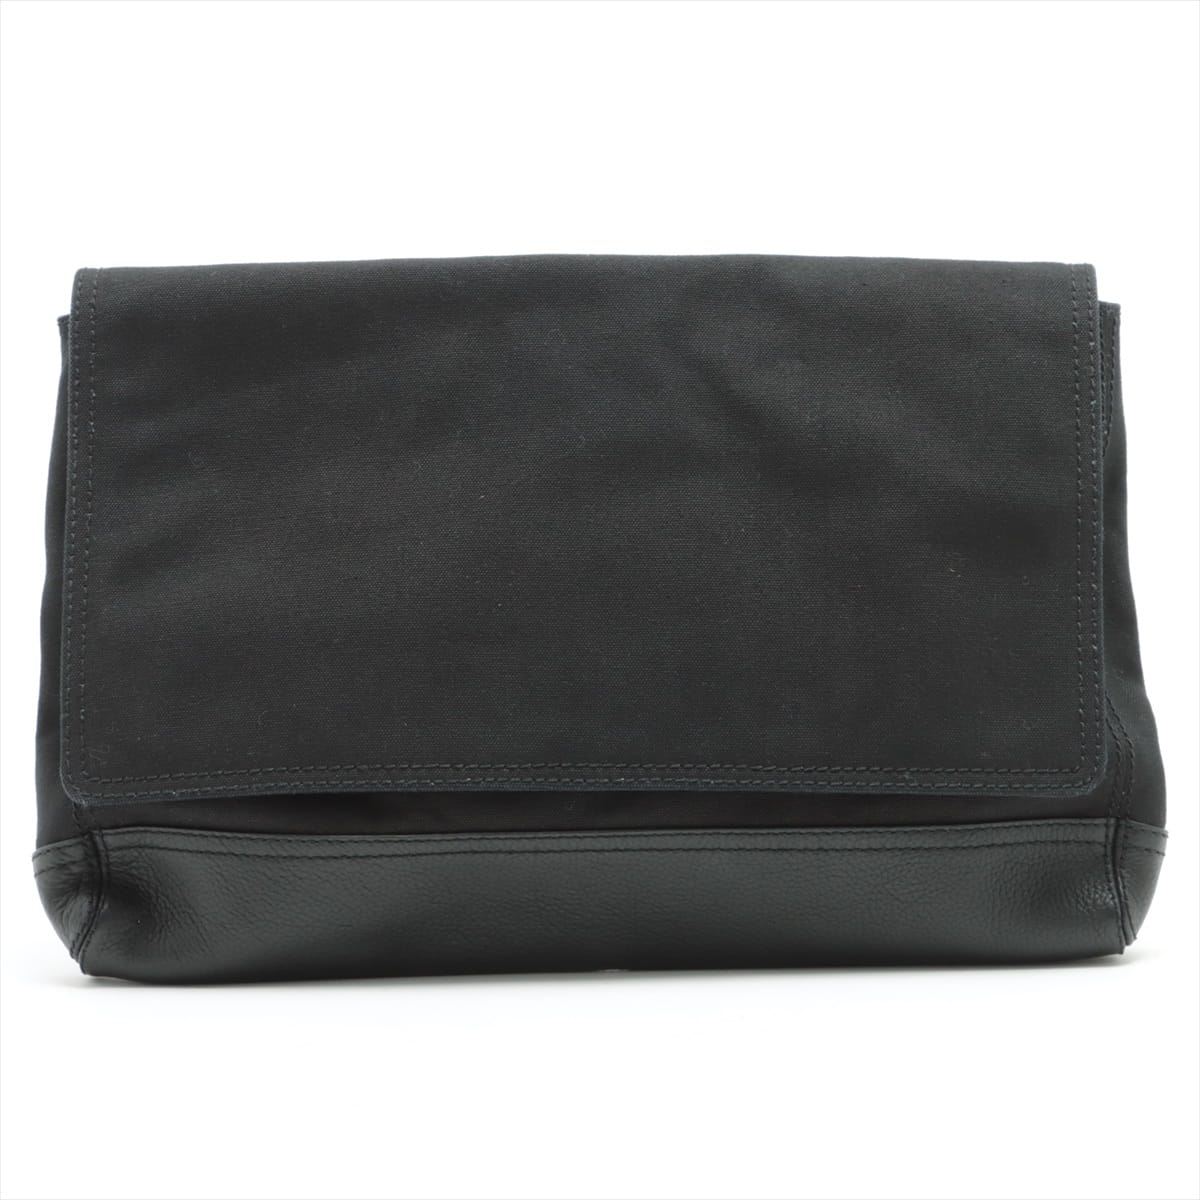 Balenciaga Canvas & leather Clutch bag Black 437367